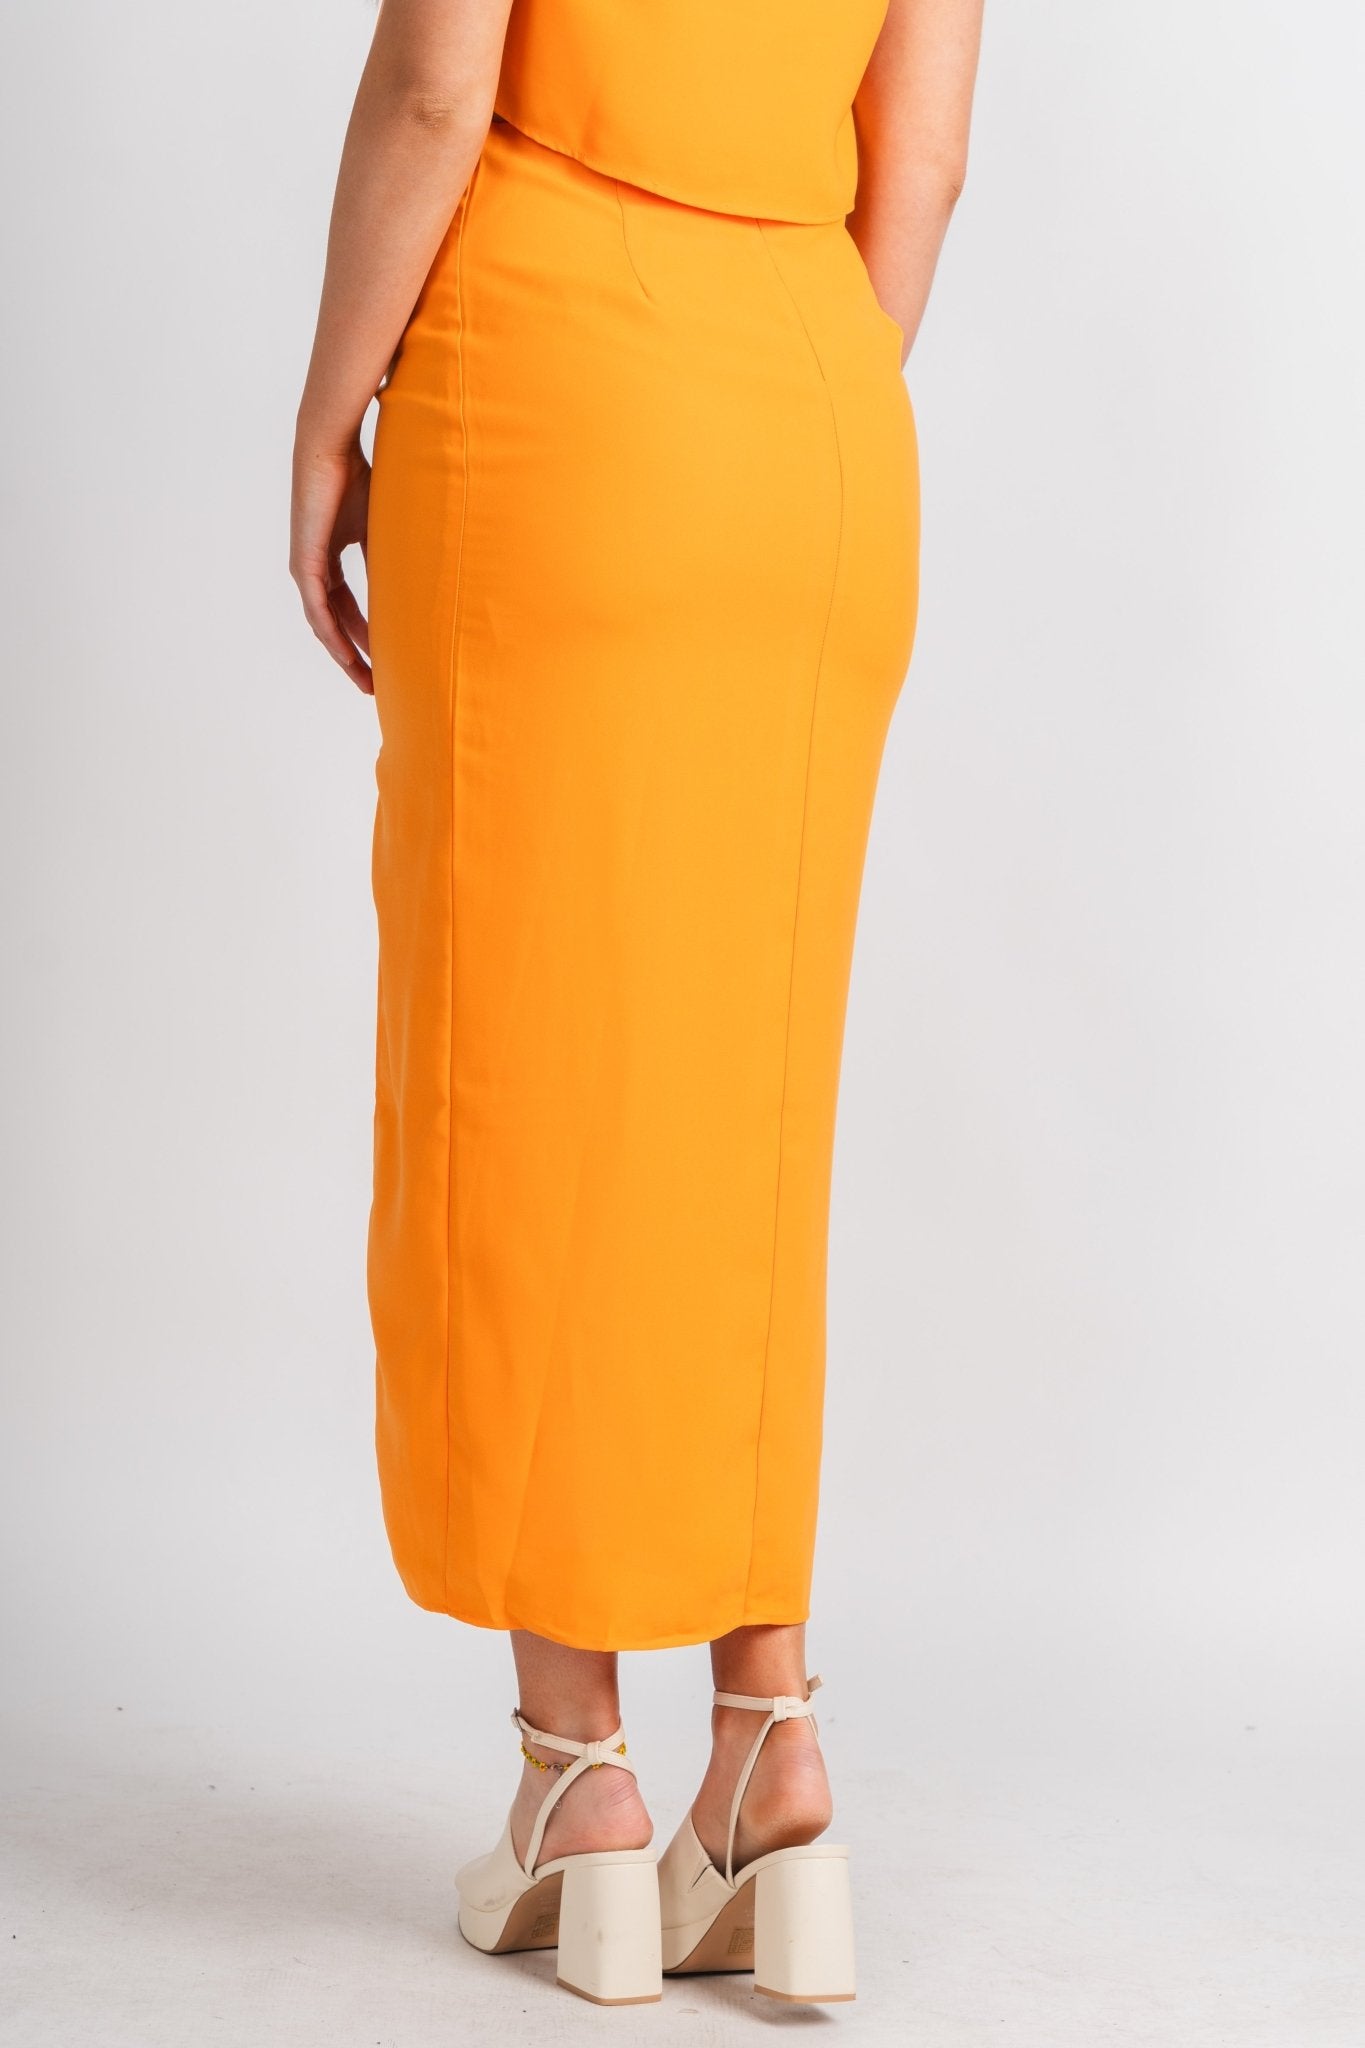 High waist midi skirt orange - Cute Skirt - Fun Vacay Basics at Lush Fashion Lounge Boutique in Oklahoma City